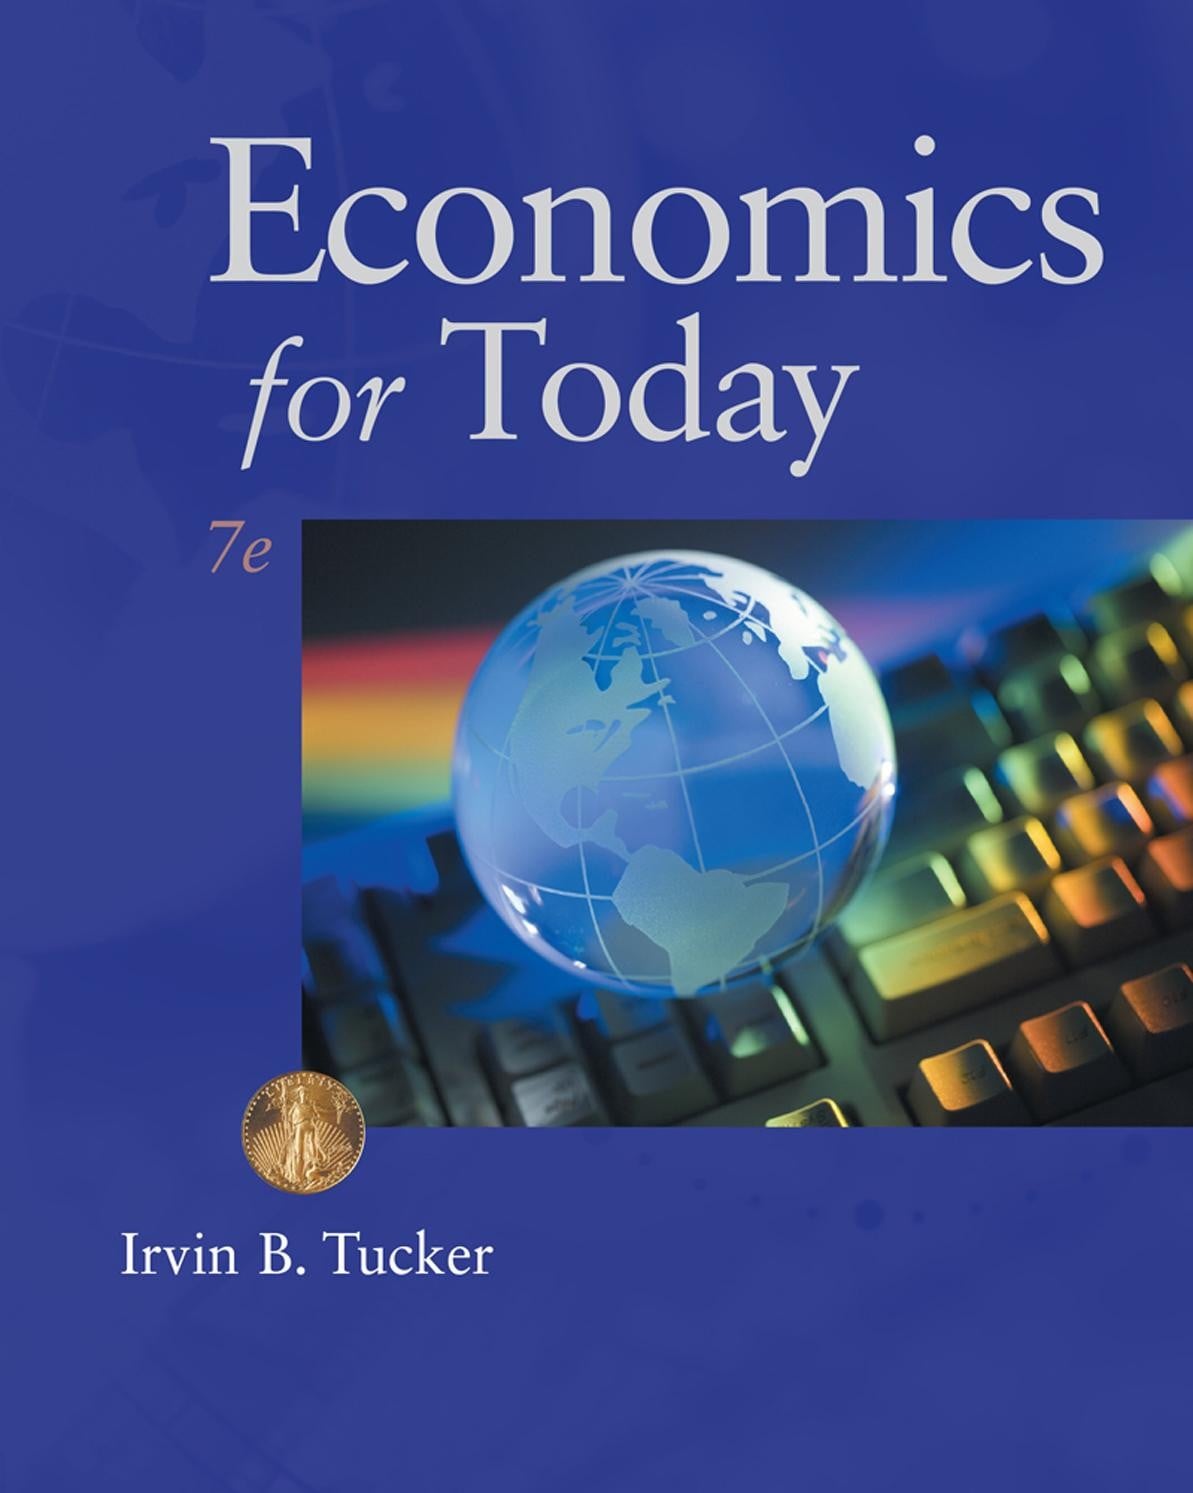 Economics for Today 7 Edición Irvin B. Tucker PDF